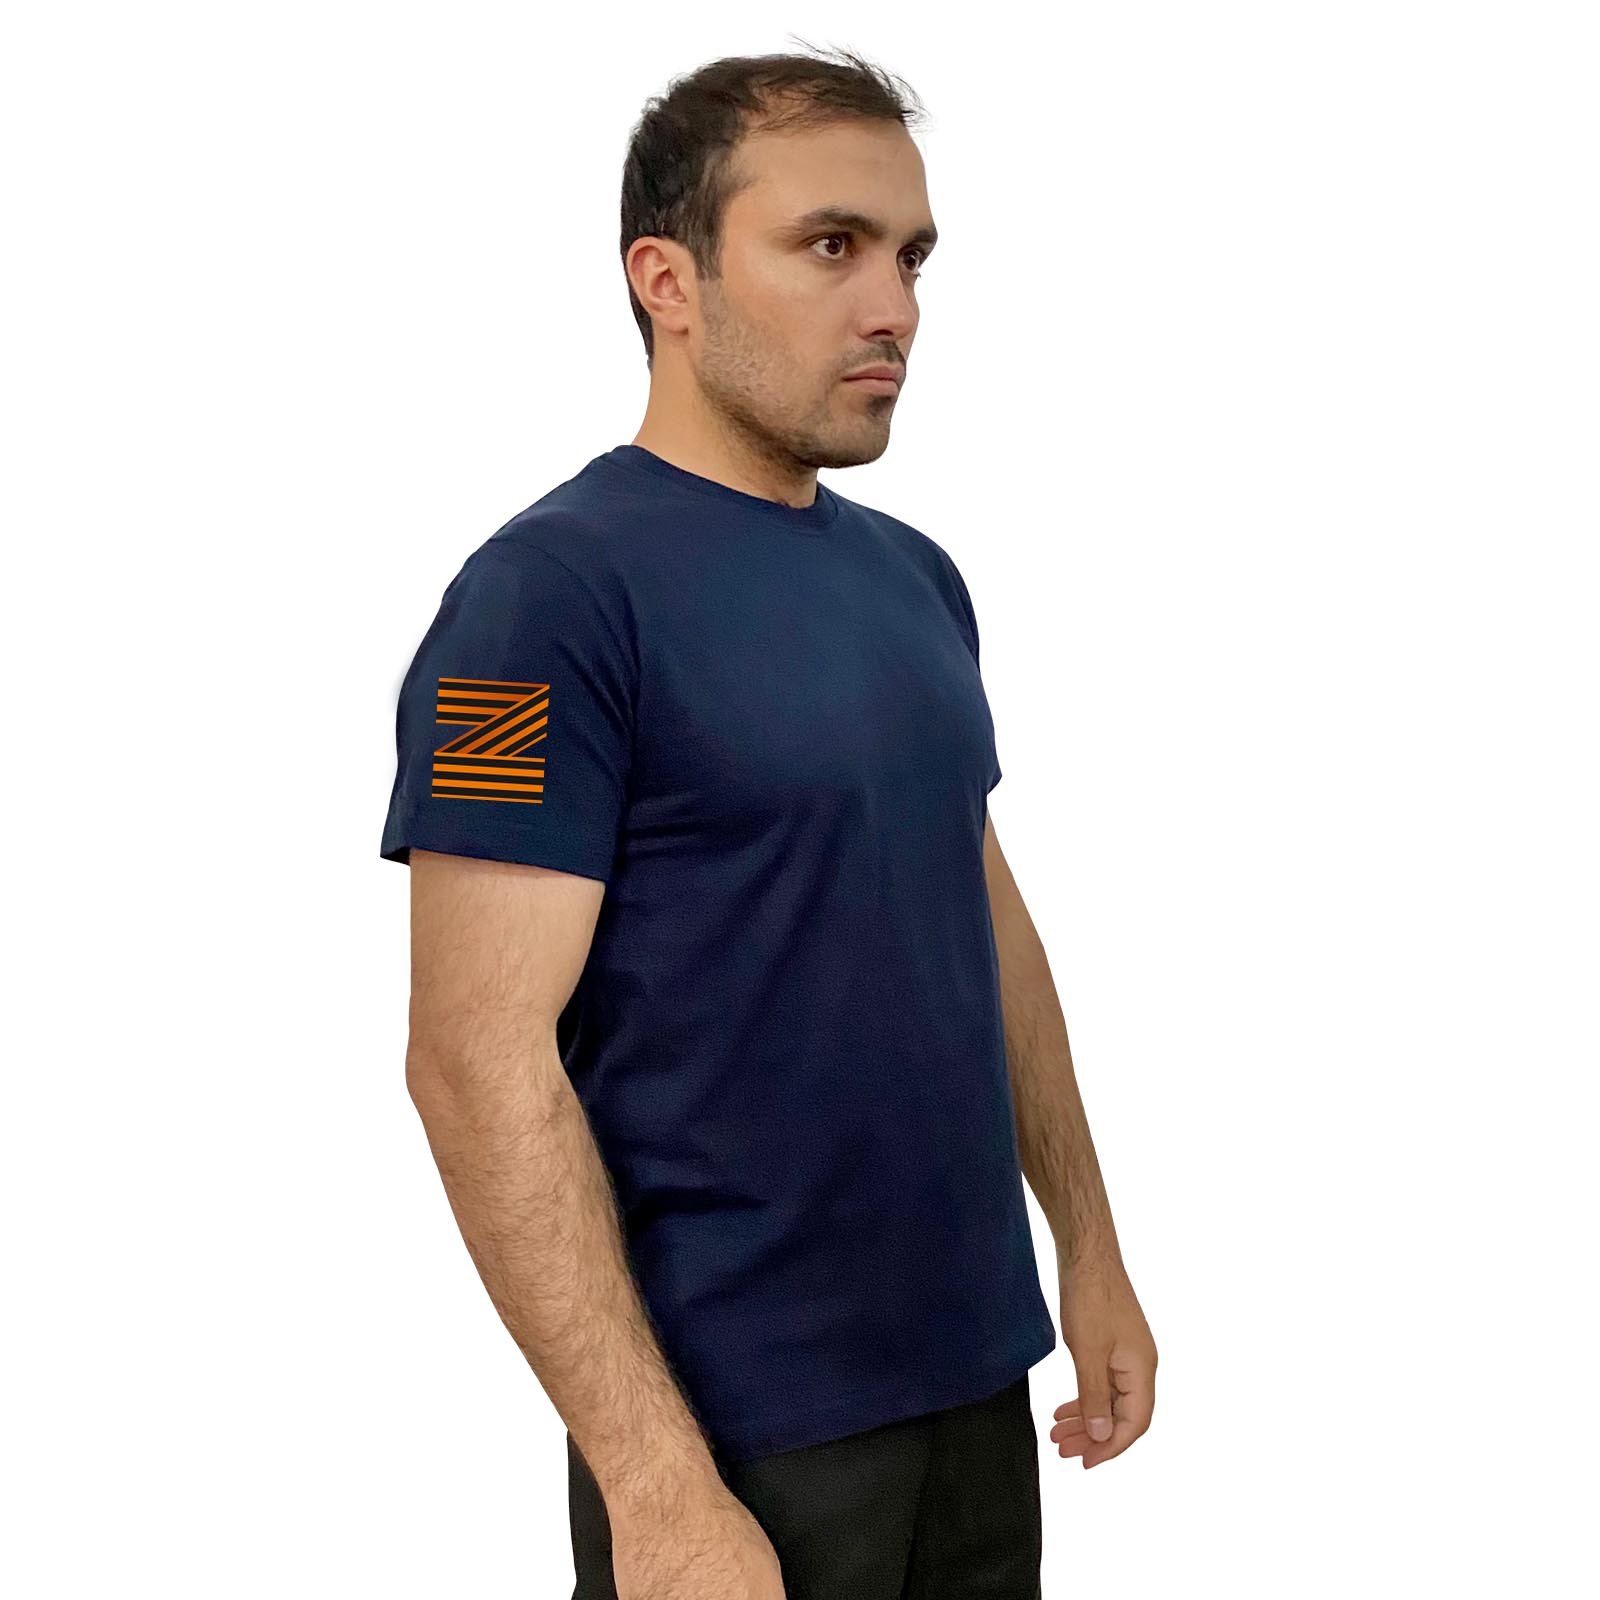 Тёмно-синяя футболка с гвардейским термопринтом Z на рукаве